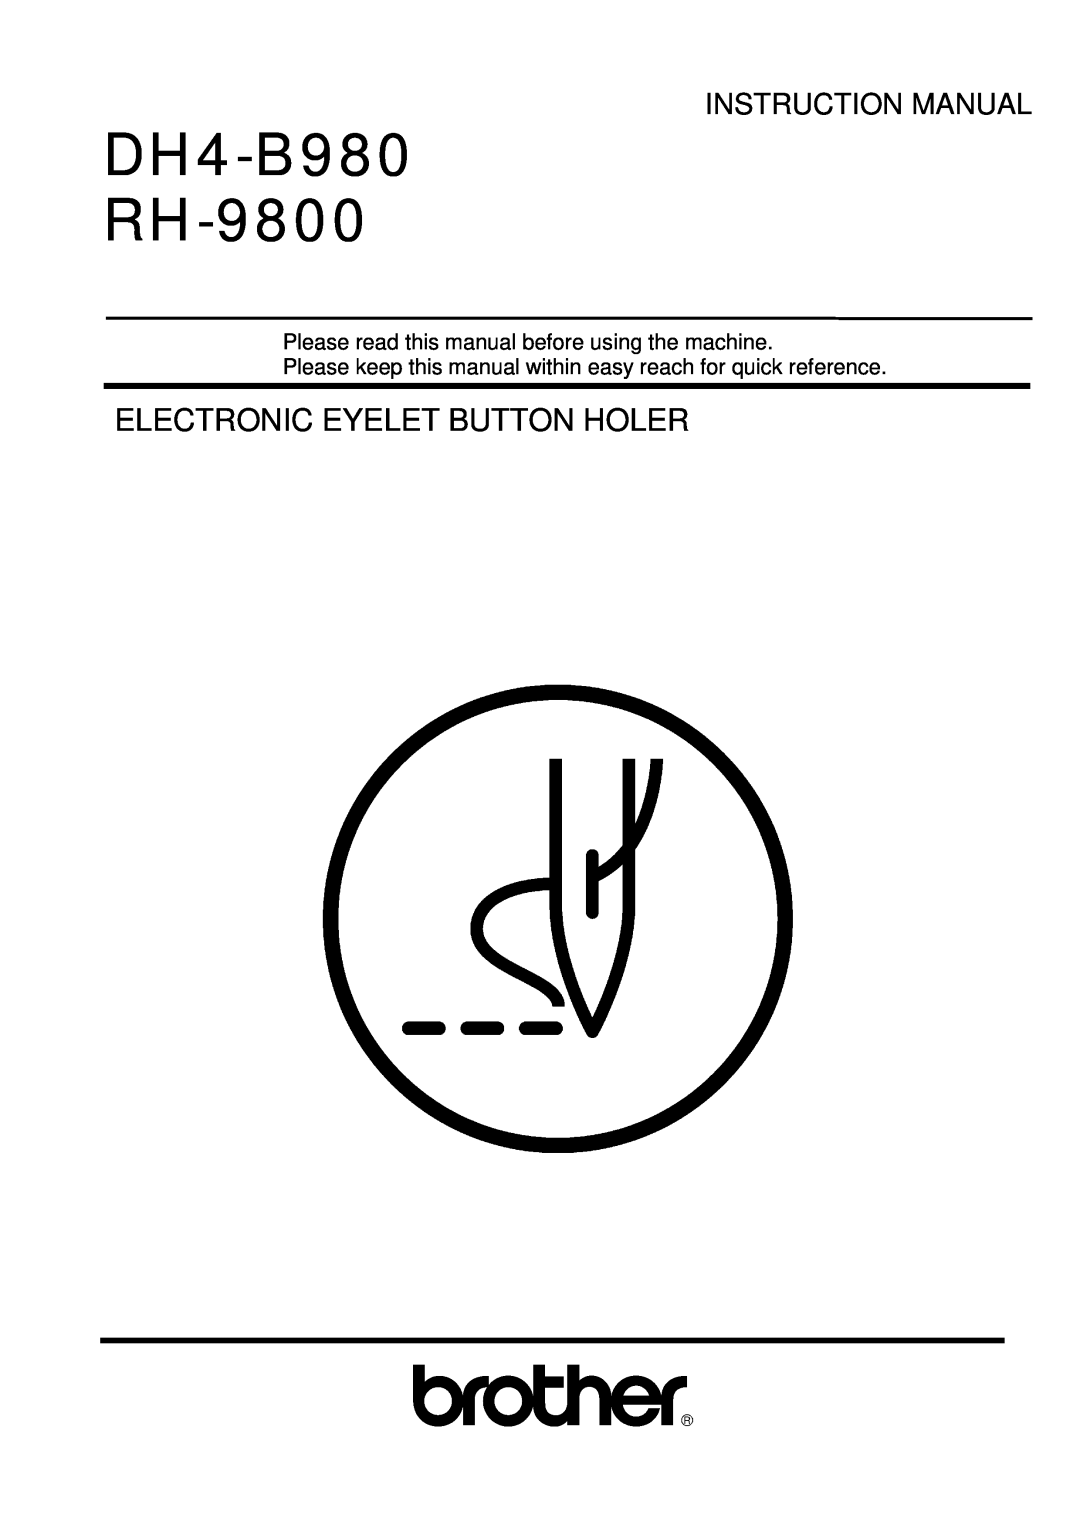 Brother instruction manual DH4-B980 RH-9800, Electronic Eyelet Button Holer, Instruction Manual 